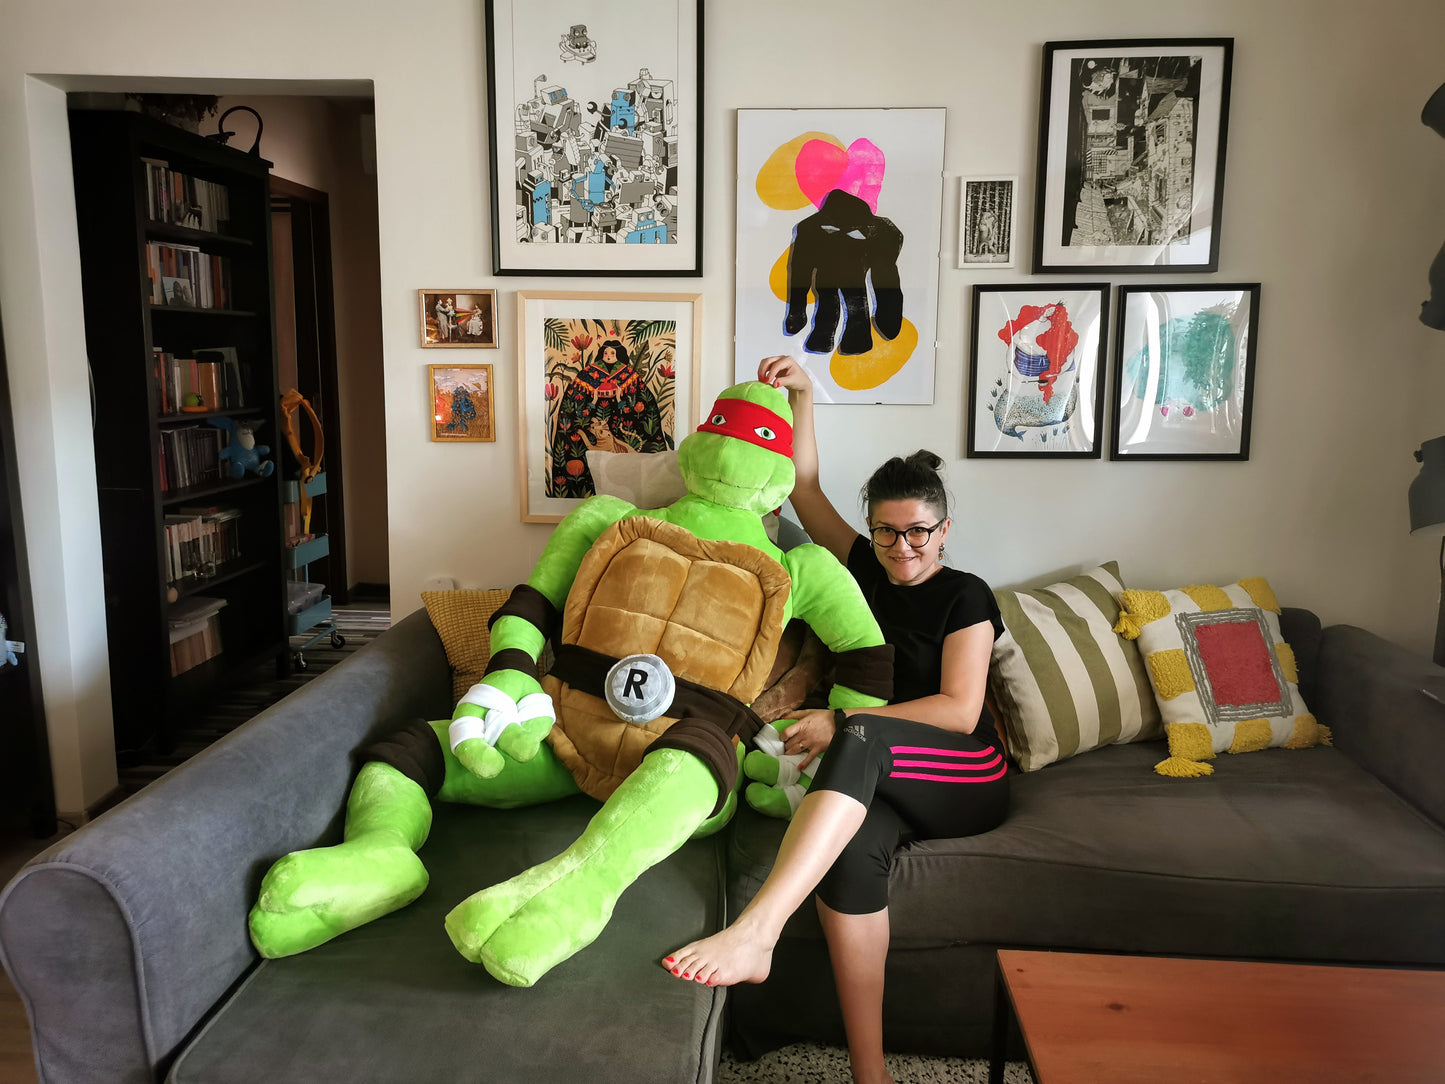 Giant Raffaello Plush, 165 cm tall snuggle buddy, Raffaello Ninja Turtle replica plush inspired by Teenage Mutant Ninja Turtles